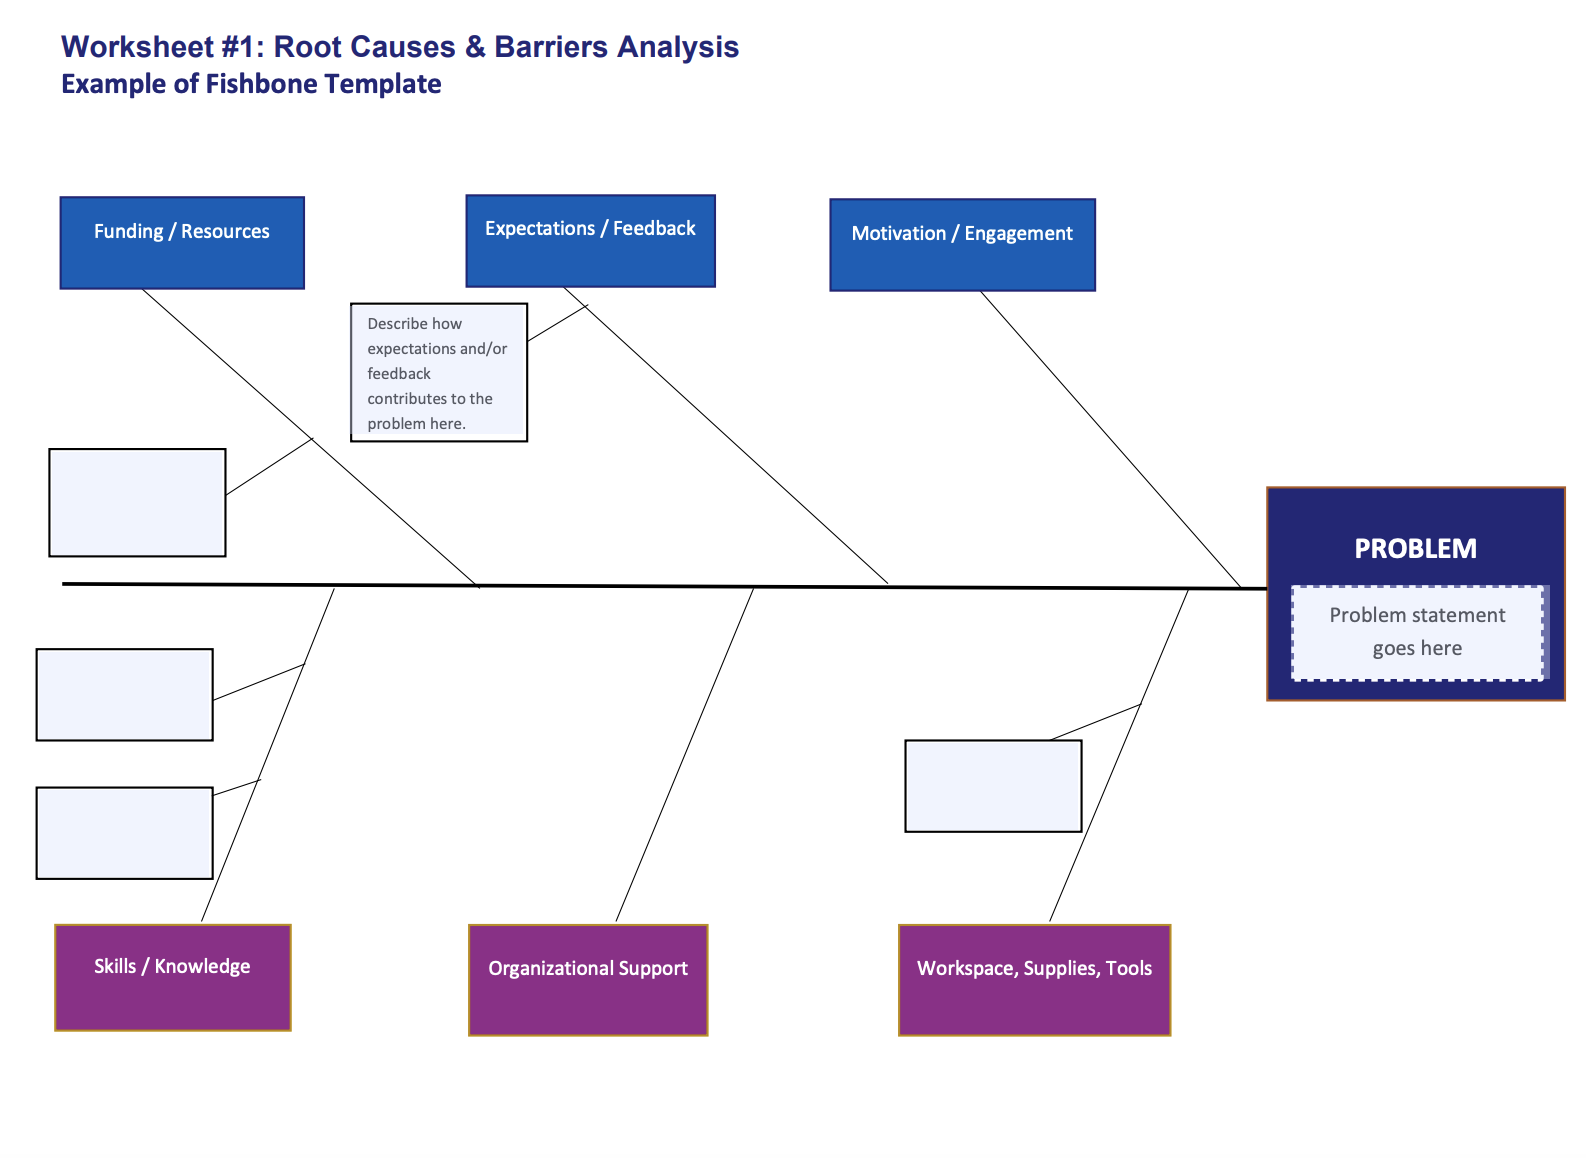 Worksheet #3: Root Causes & Barriers Analysis